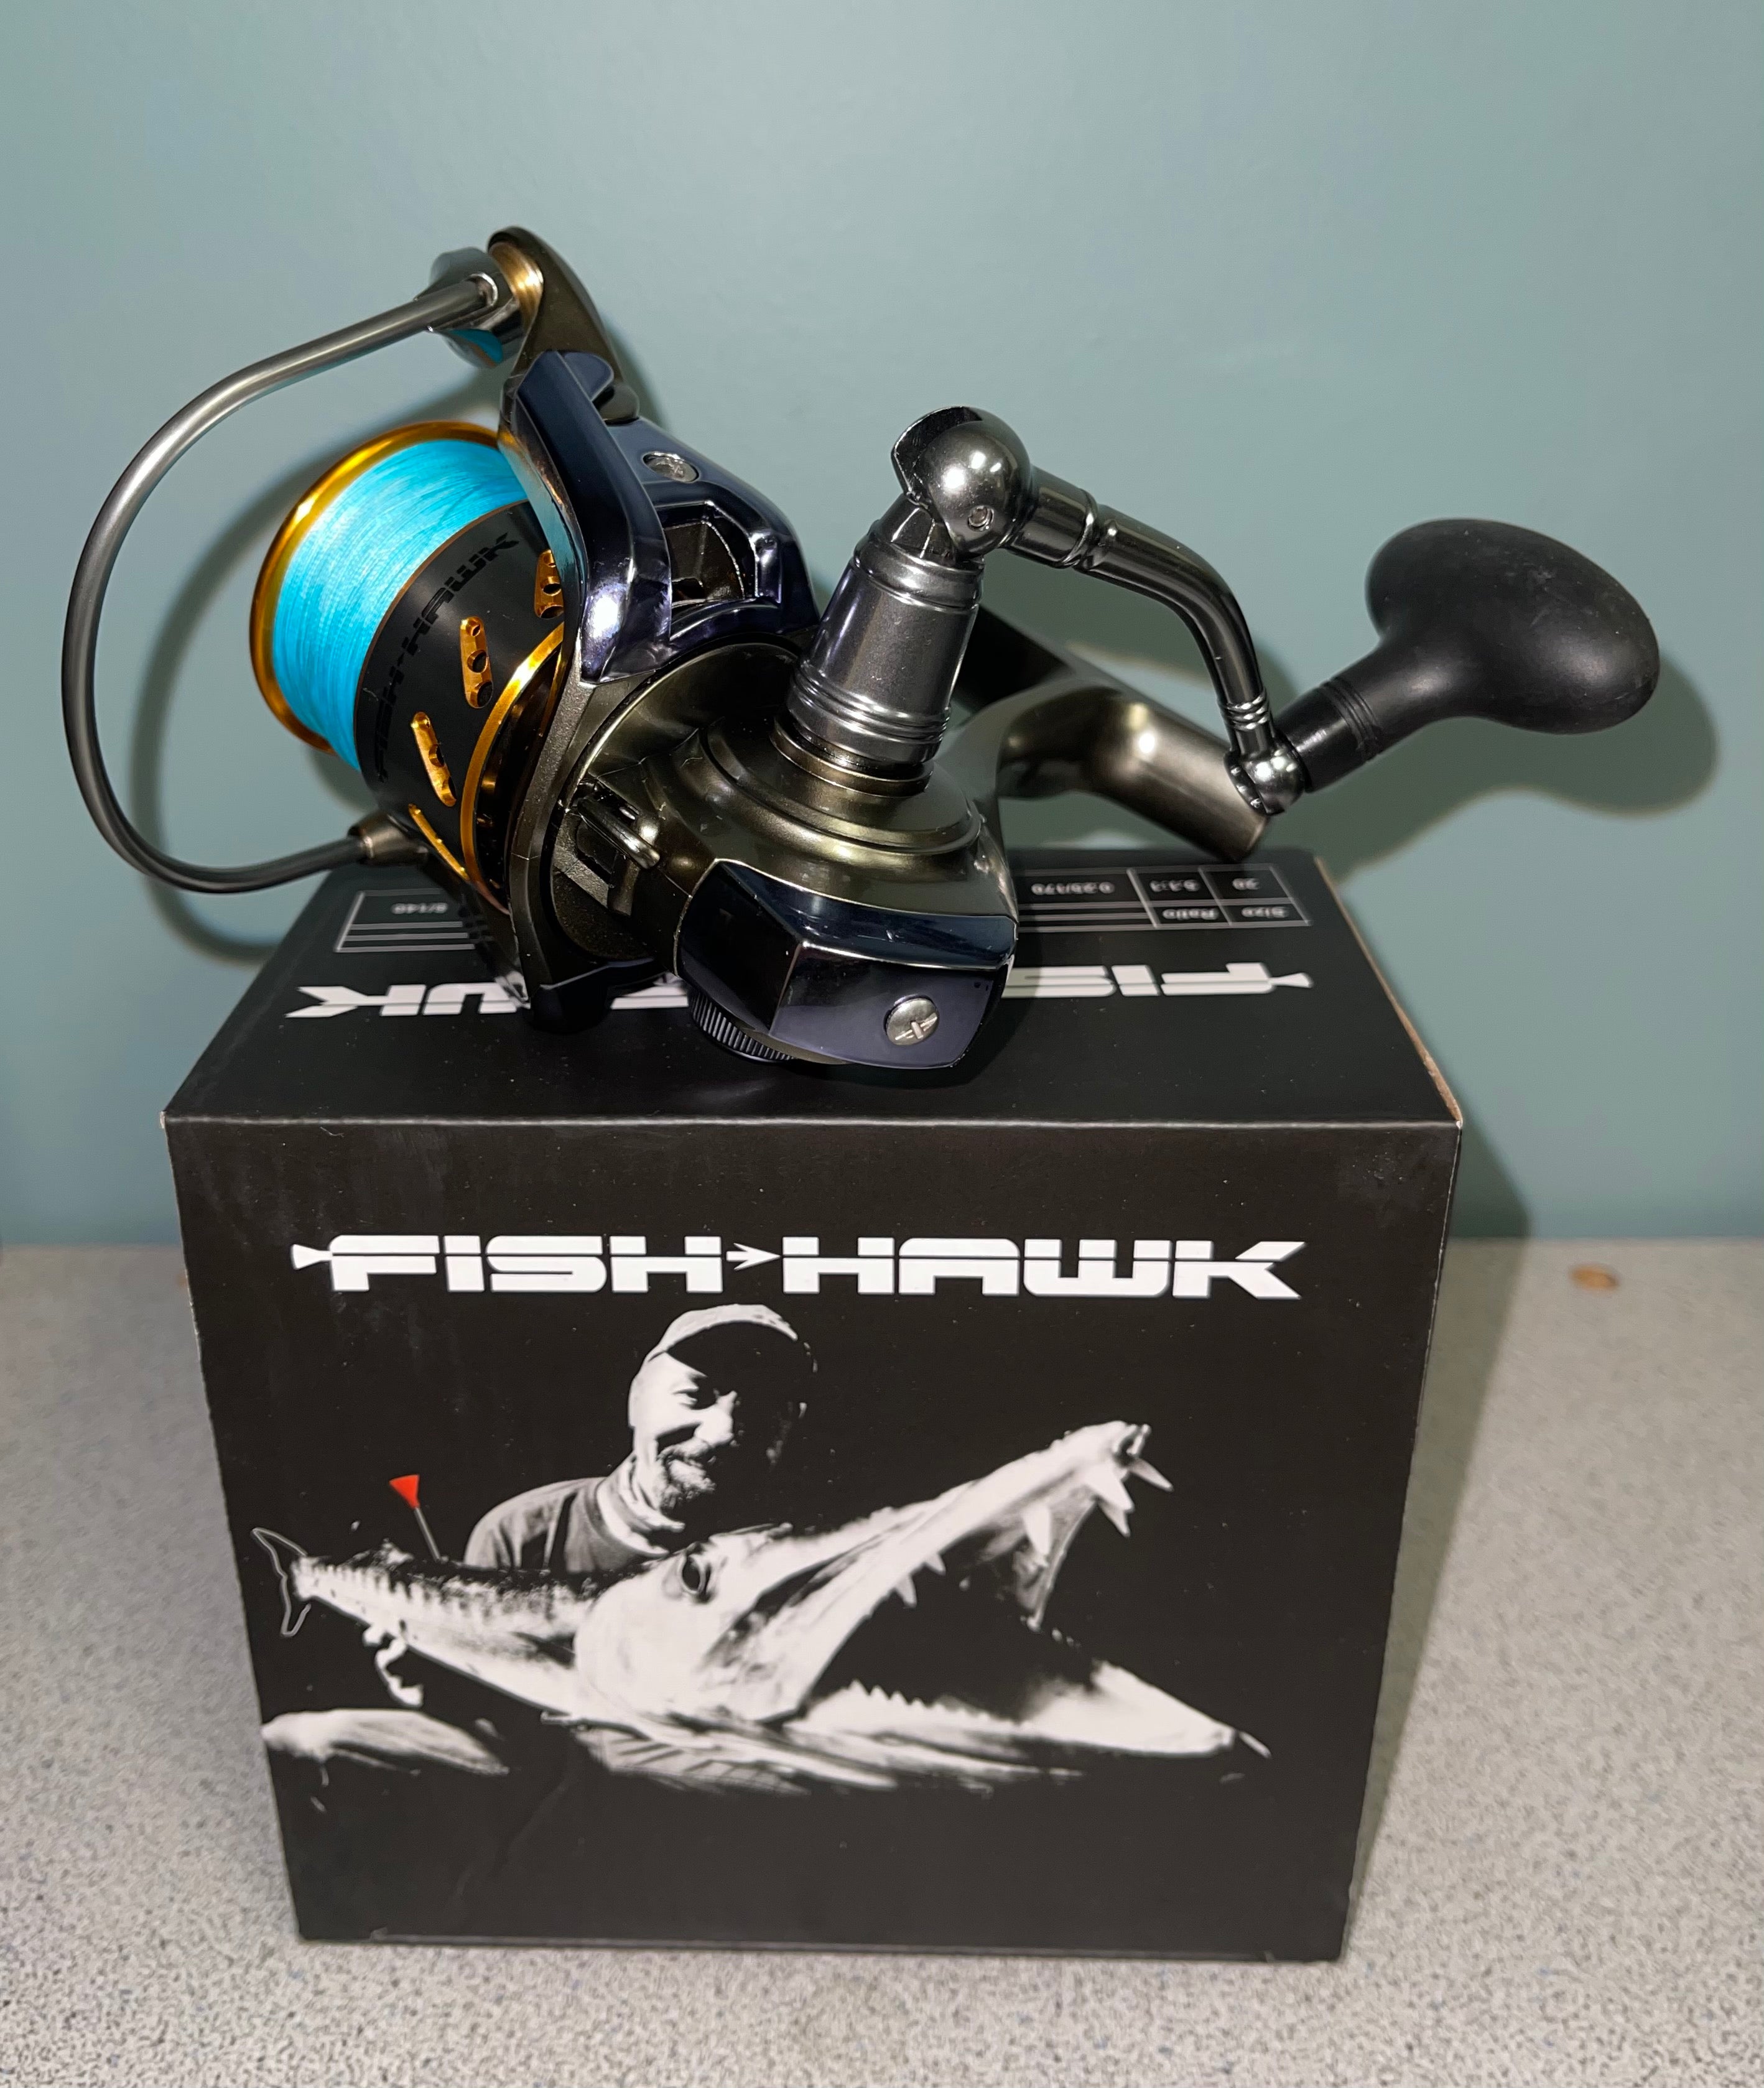 12 Darts- .50 Caliber Fish Hawk – Slock Master